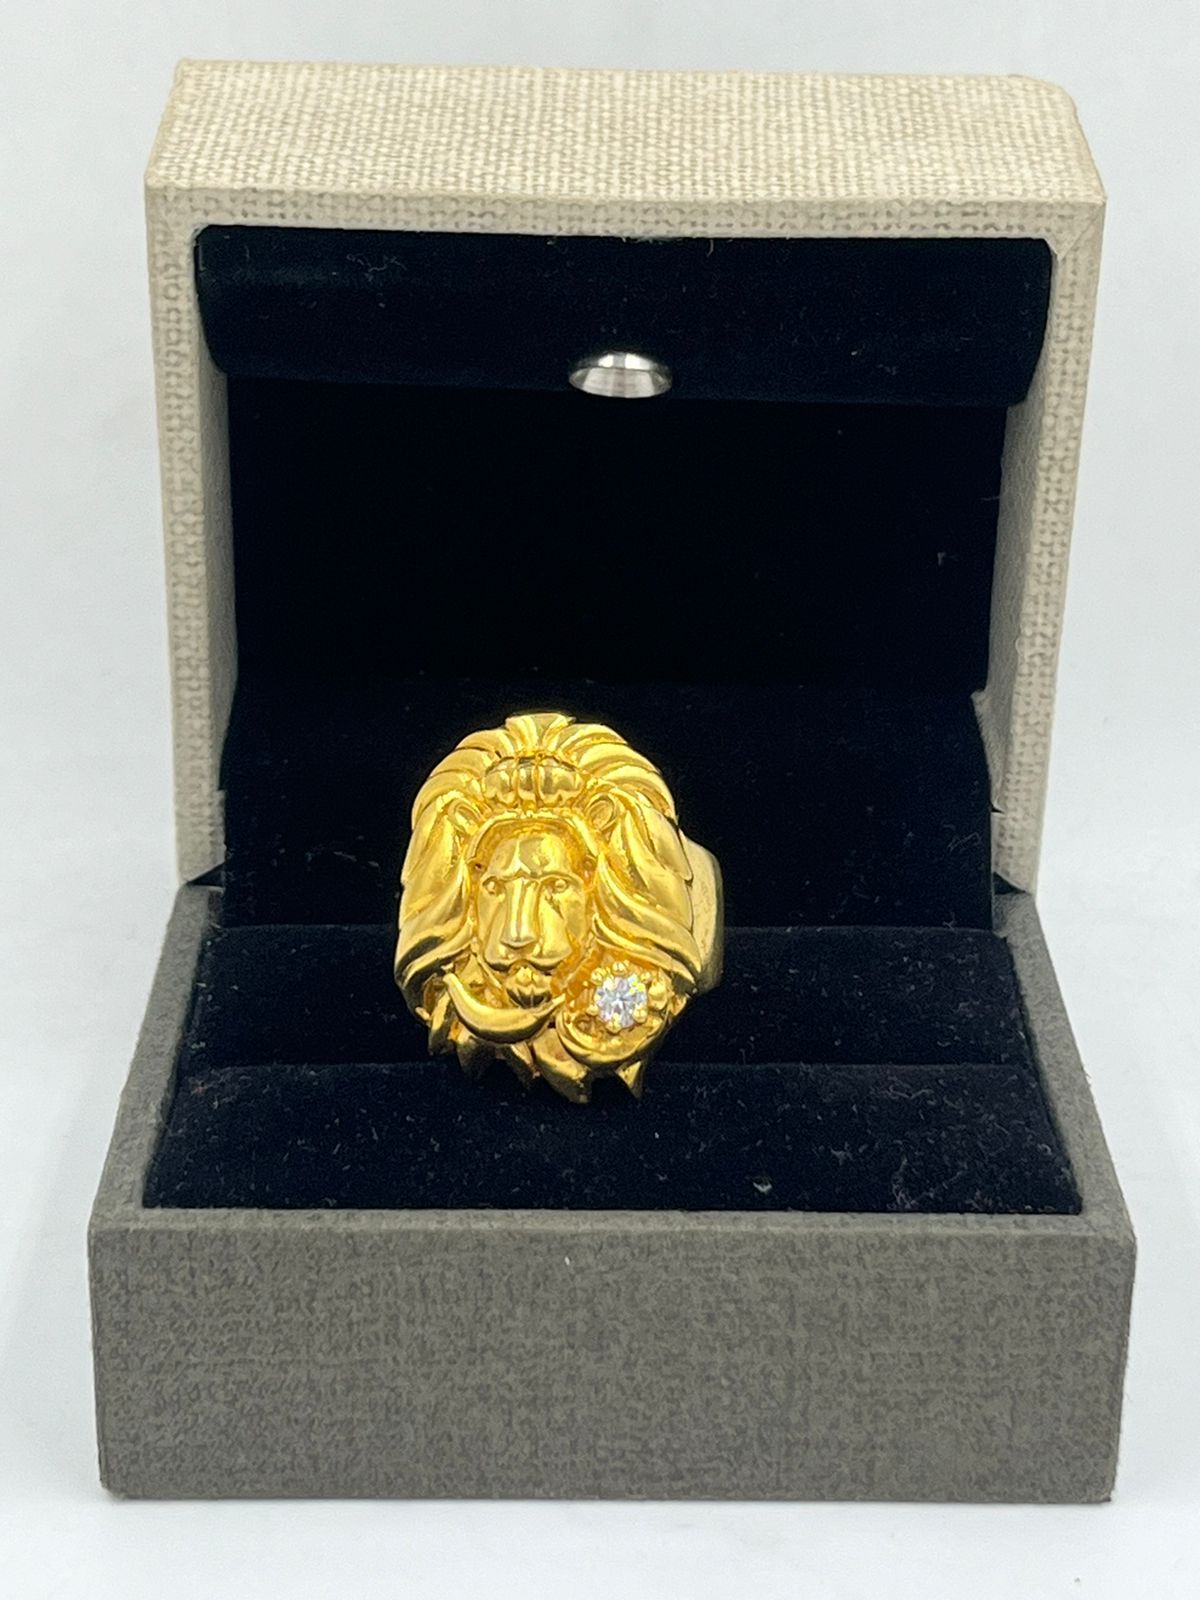 1 GRAM GOLD LION RING FOR MEN DESIGN A-605 – Radhe Imitation